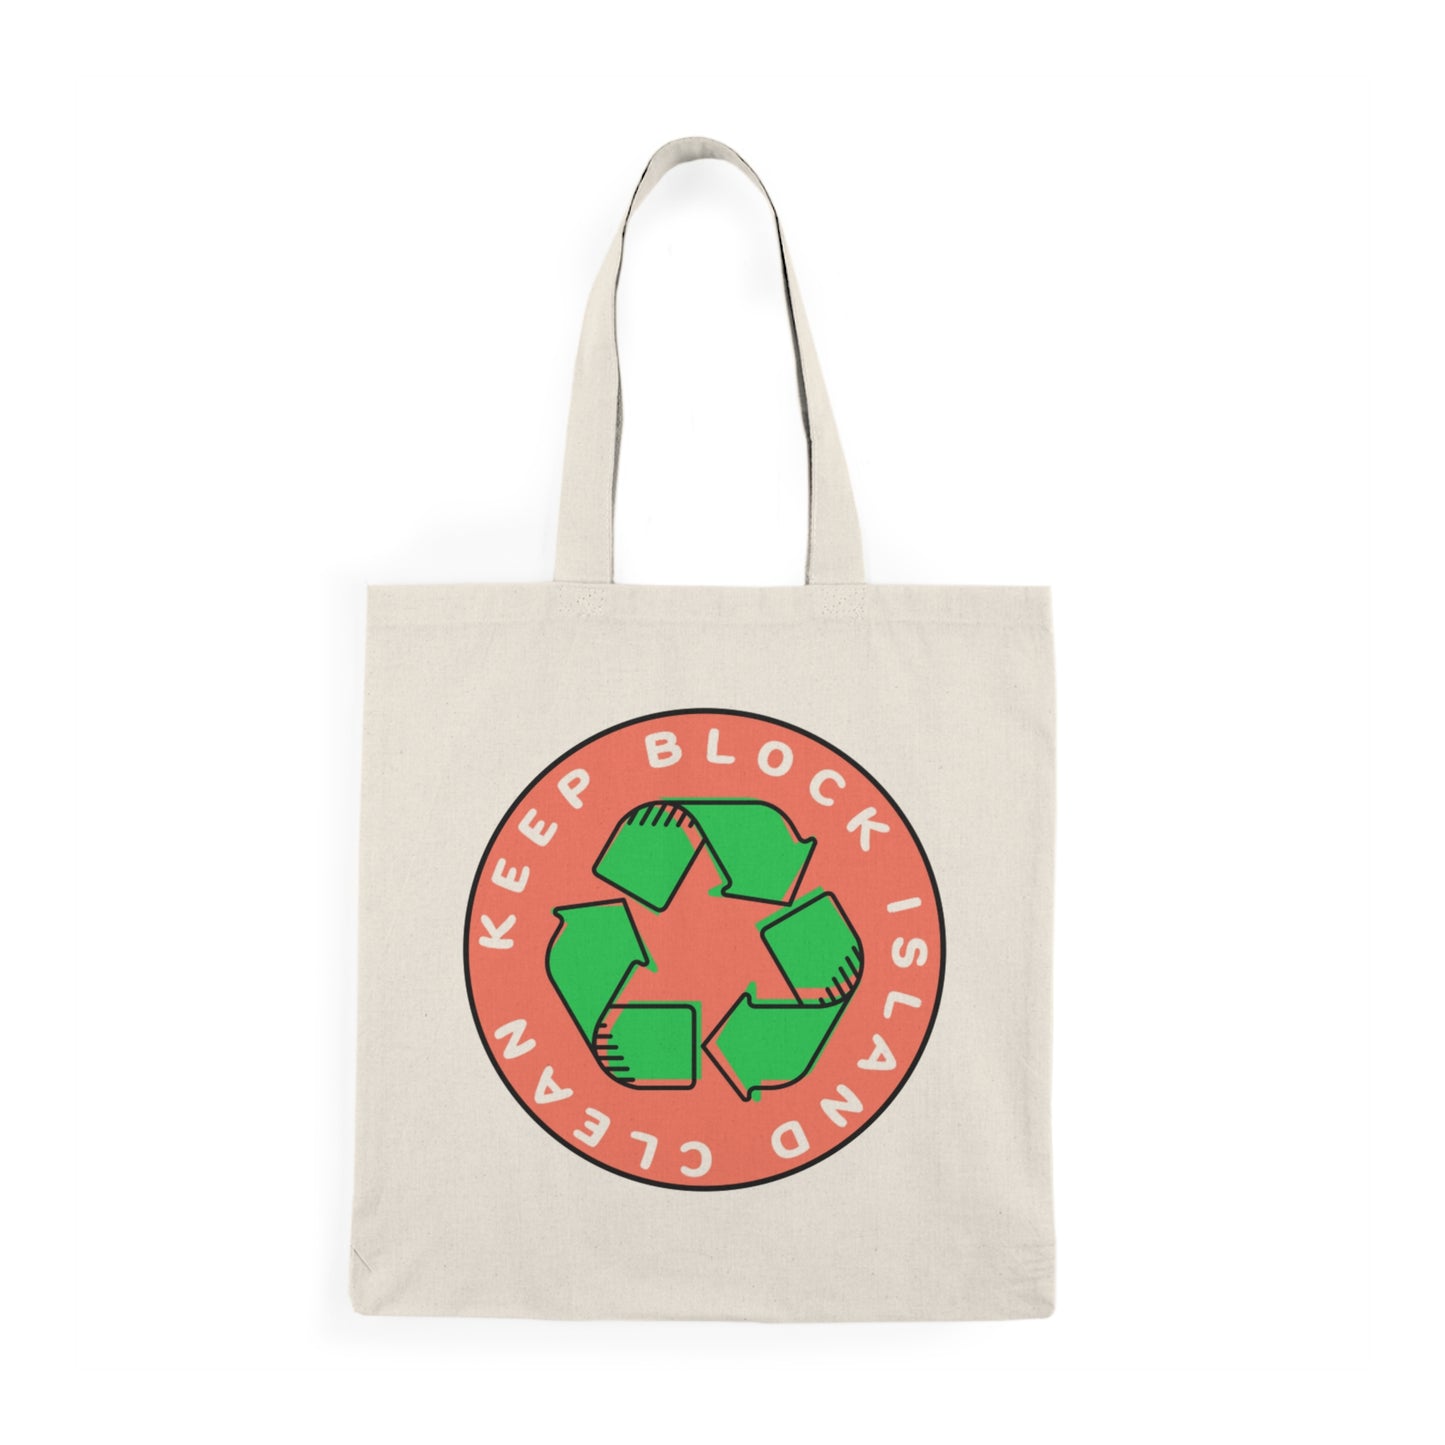 Keep Block Island Clean Tote Bag